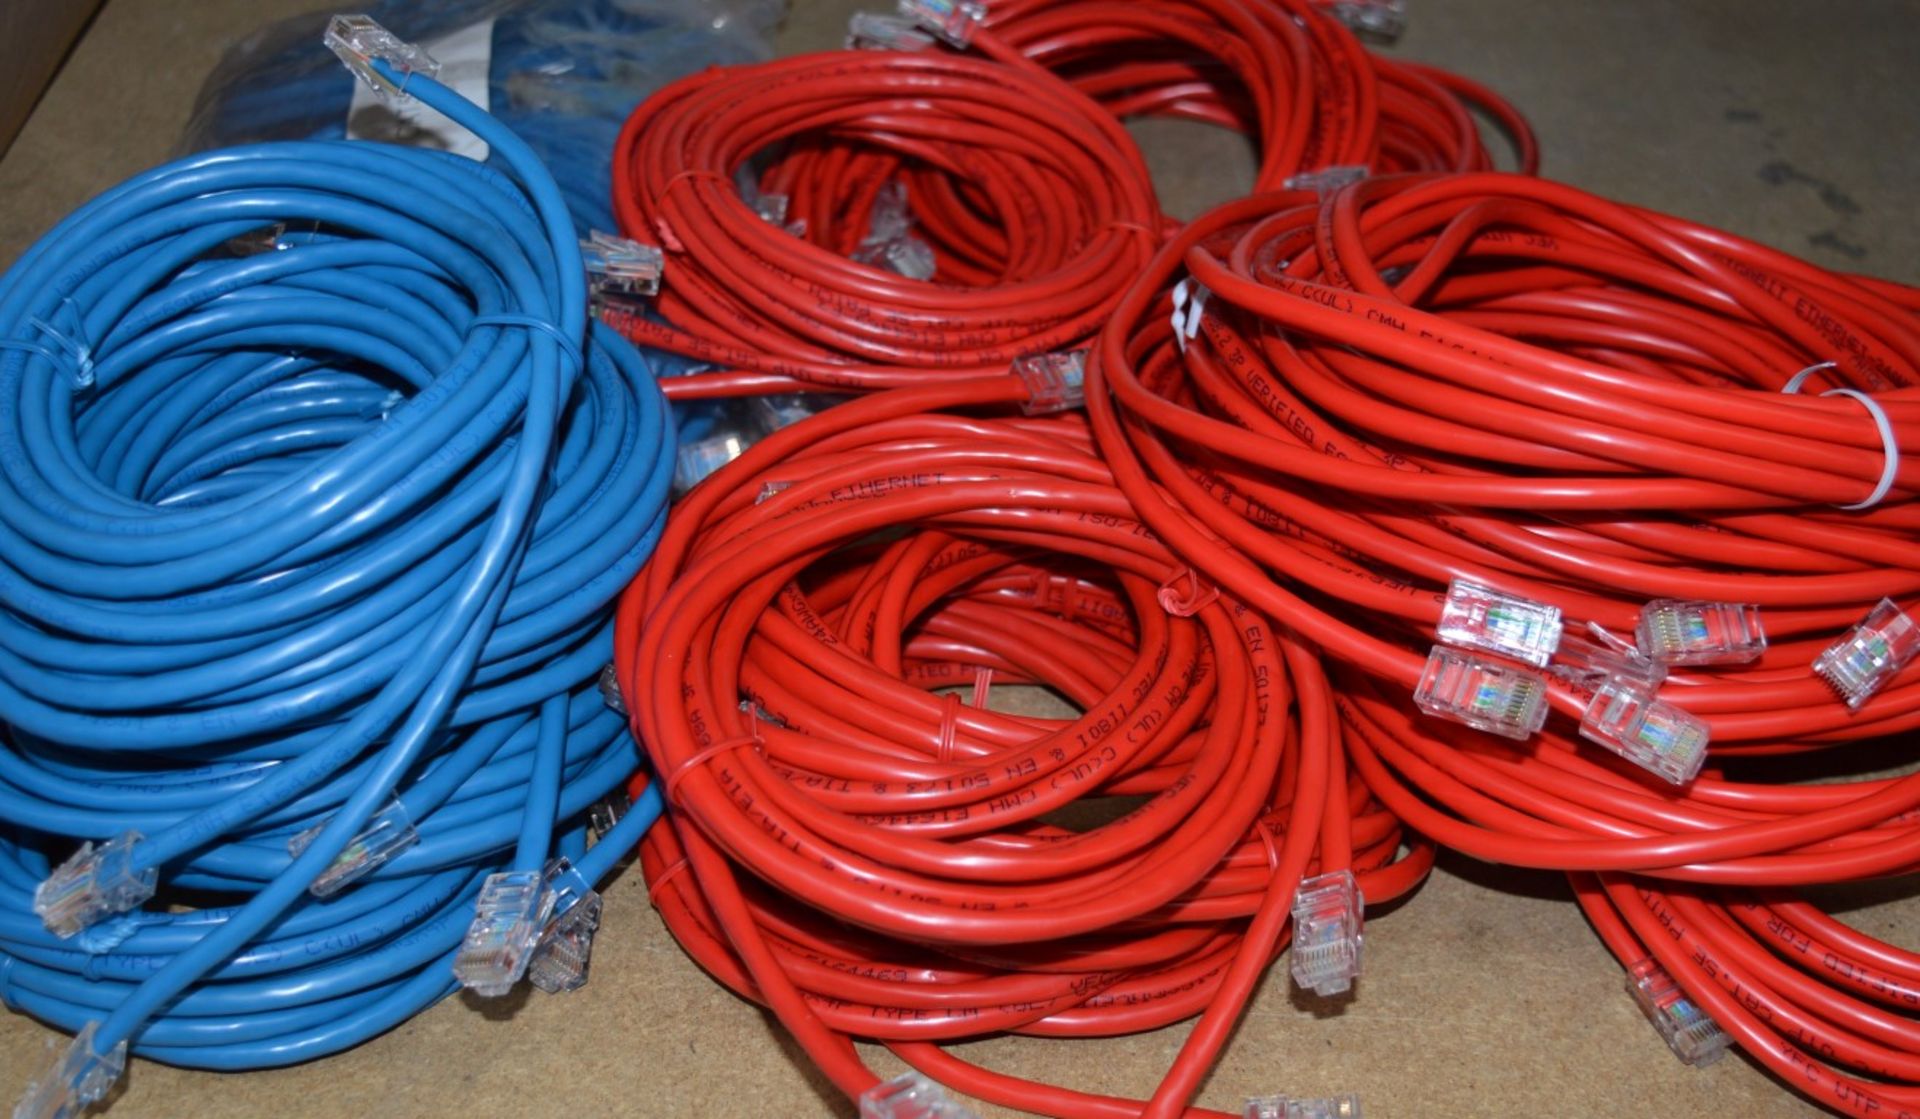 114 x CAT 5 ENB Ethernet Cables - Unused Stock - Purple, Blue, Red - Ref TEC 429/430 - CL106 -